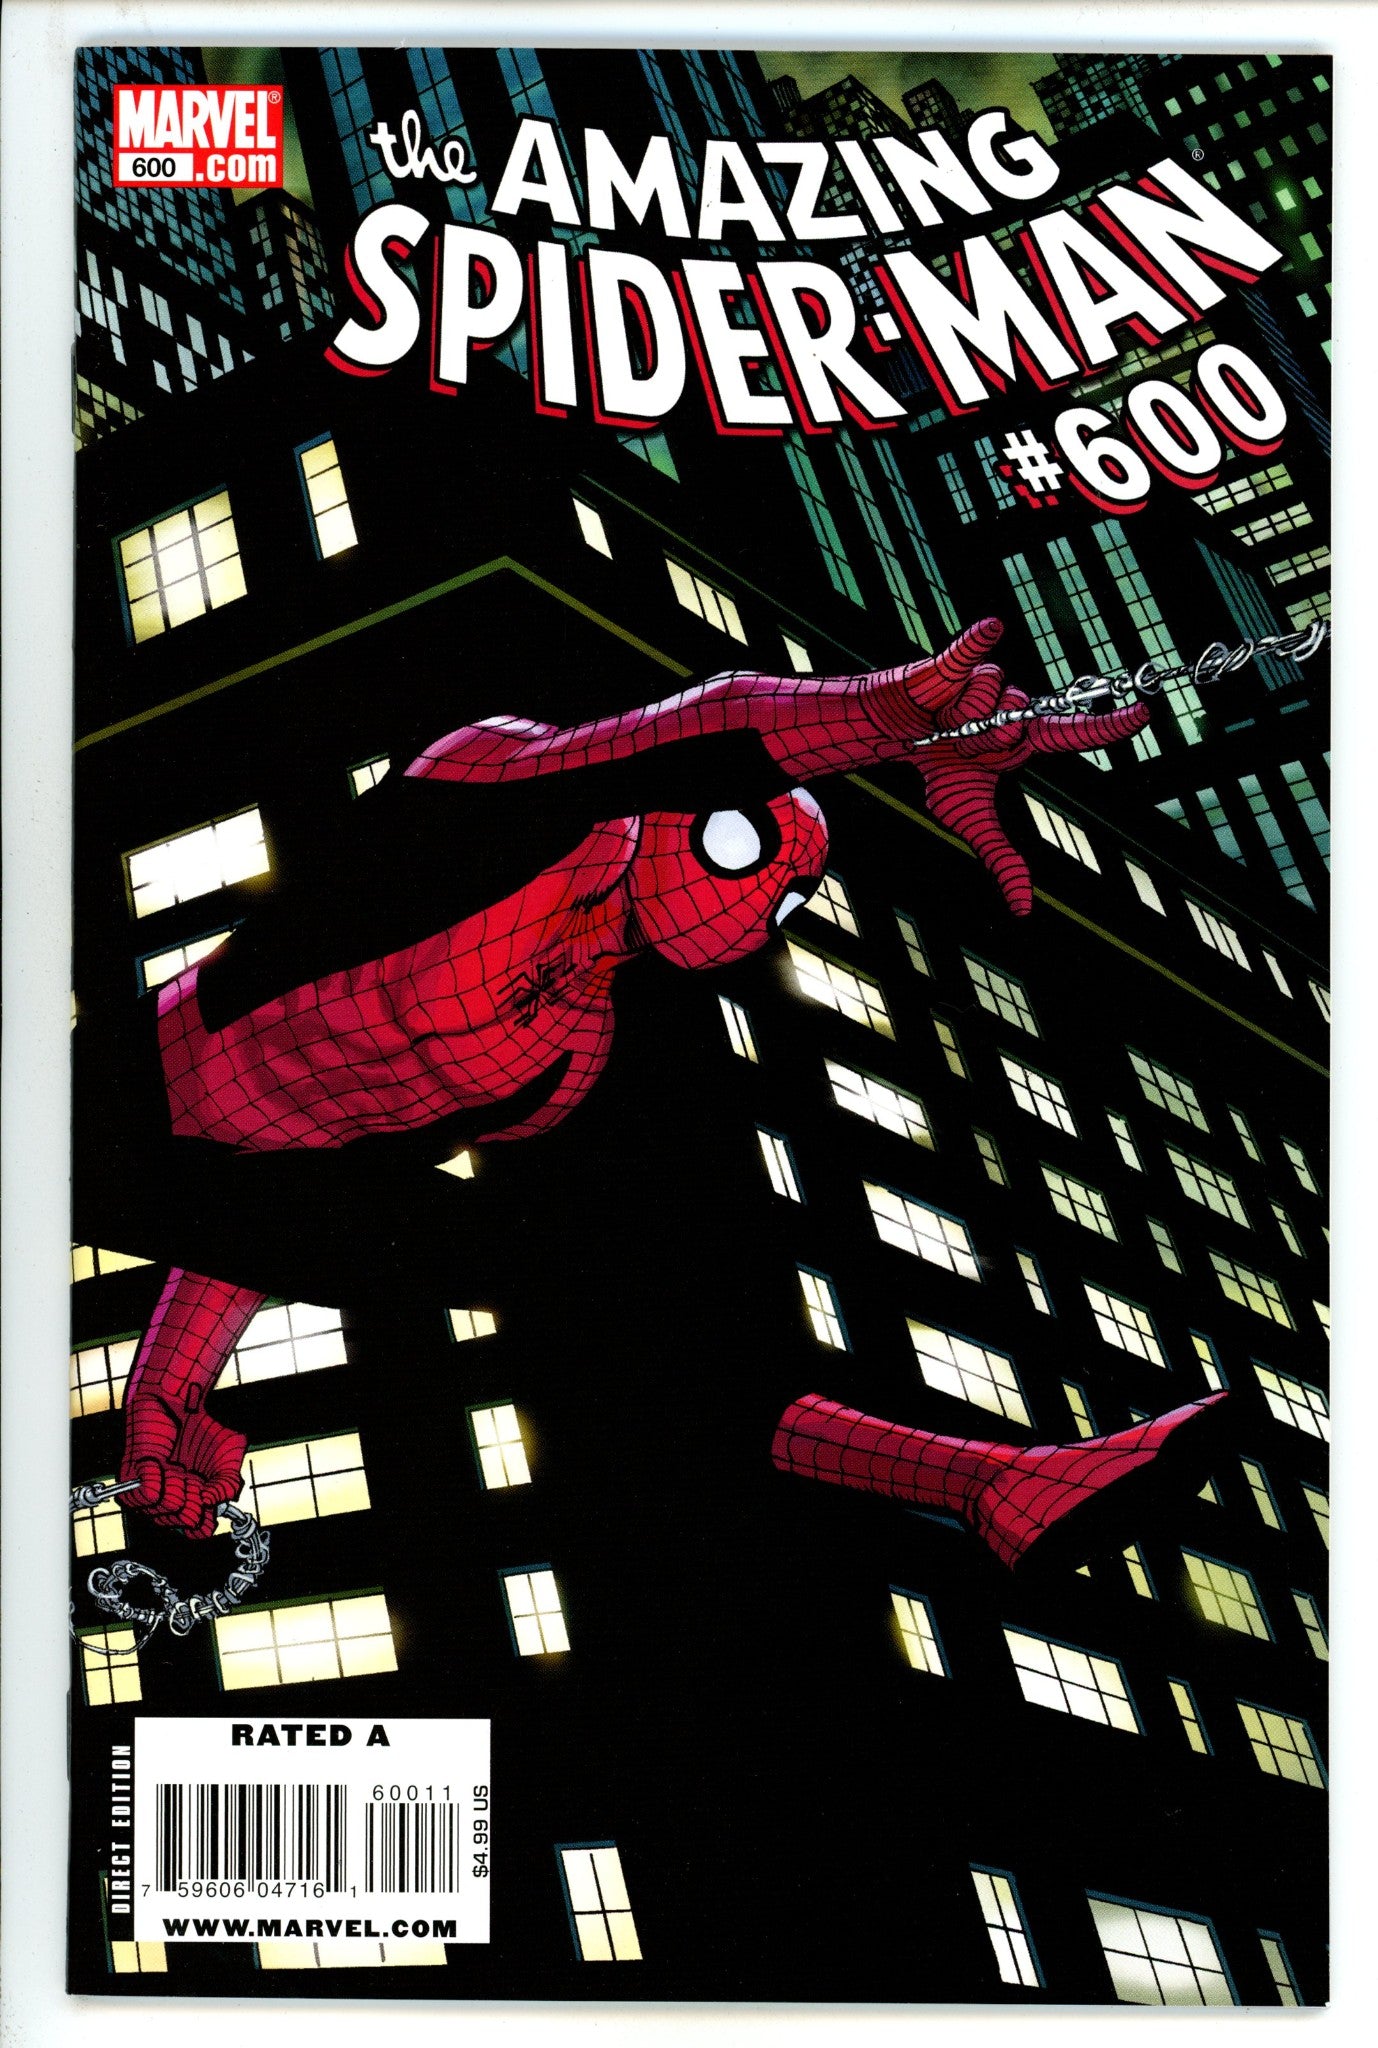 The Amazing Spider-Man Vol 2 600 VF/NM (9.0) (2009) Jr. Variant 